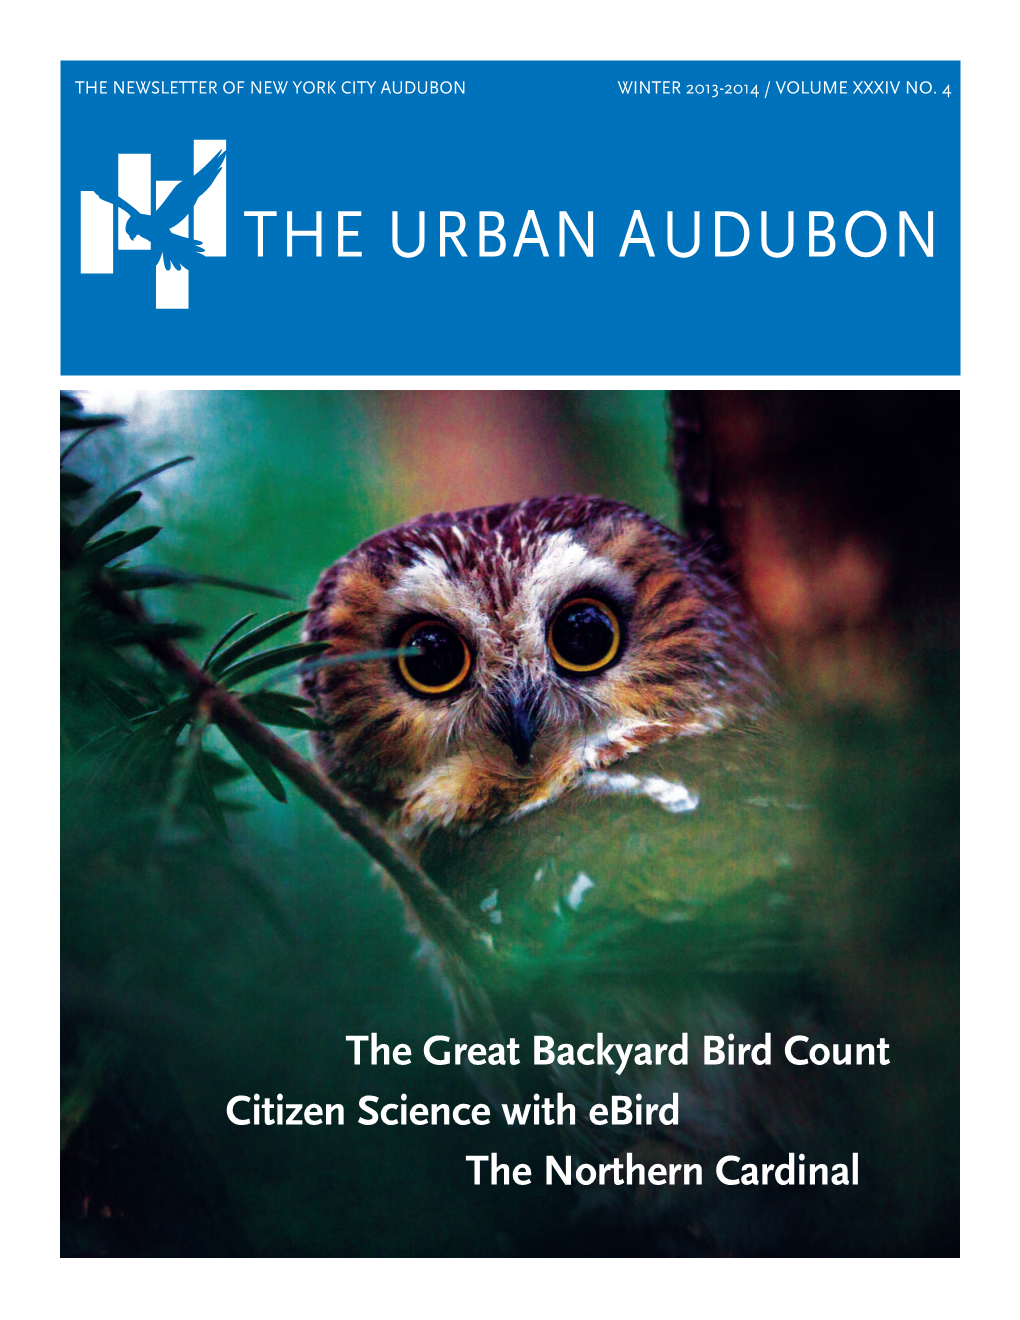 The Urban Audubon